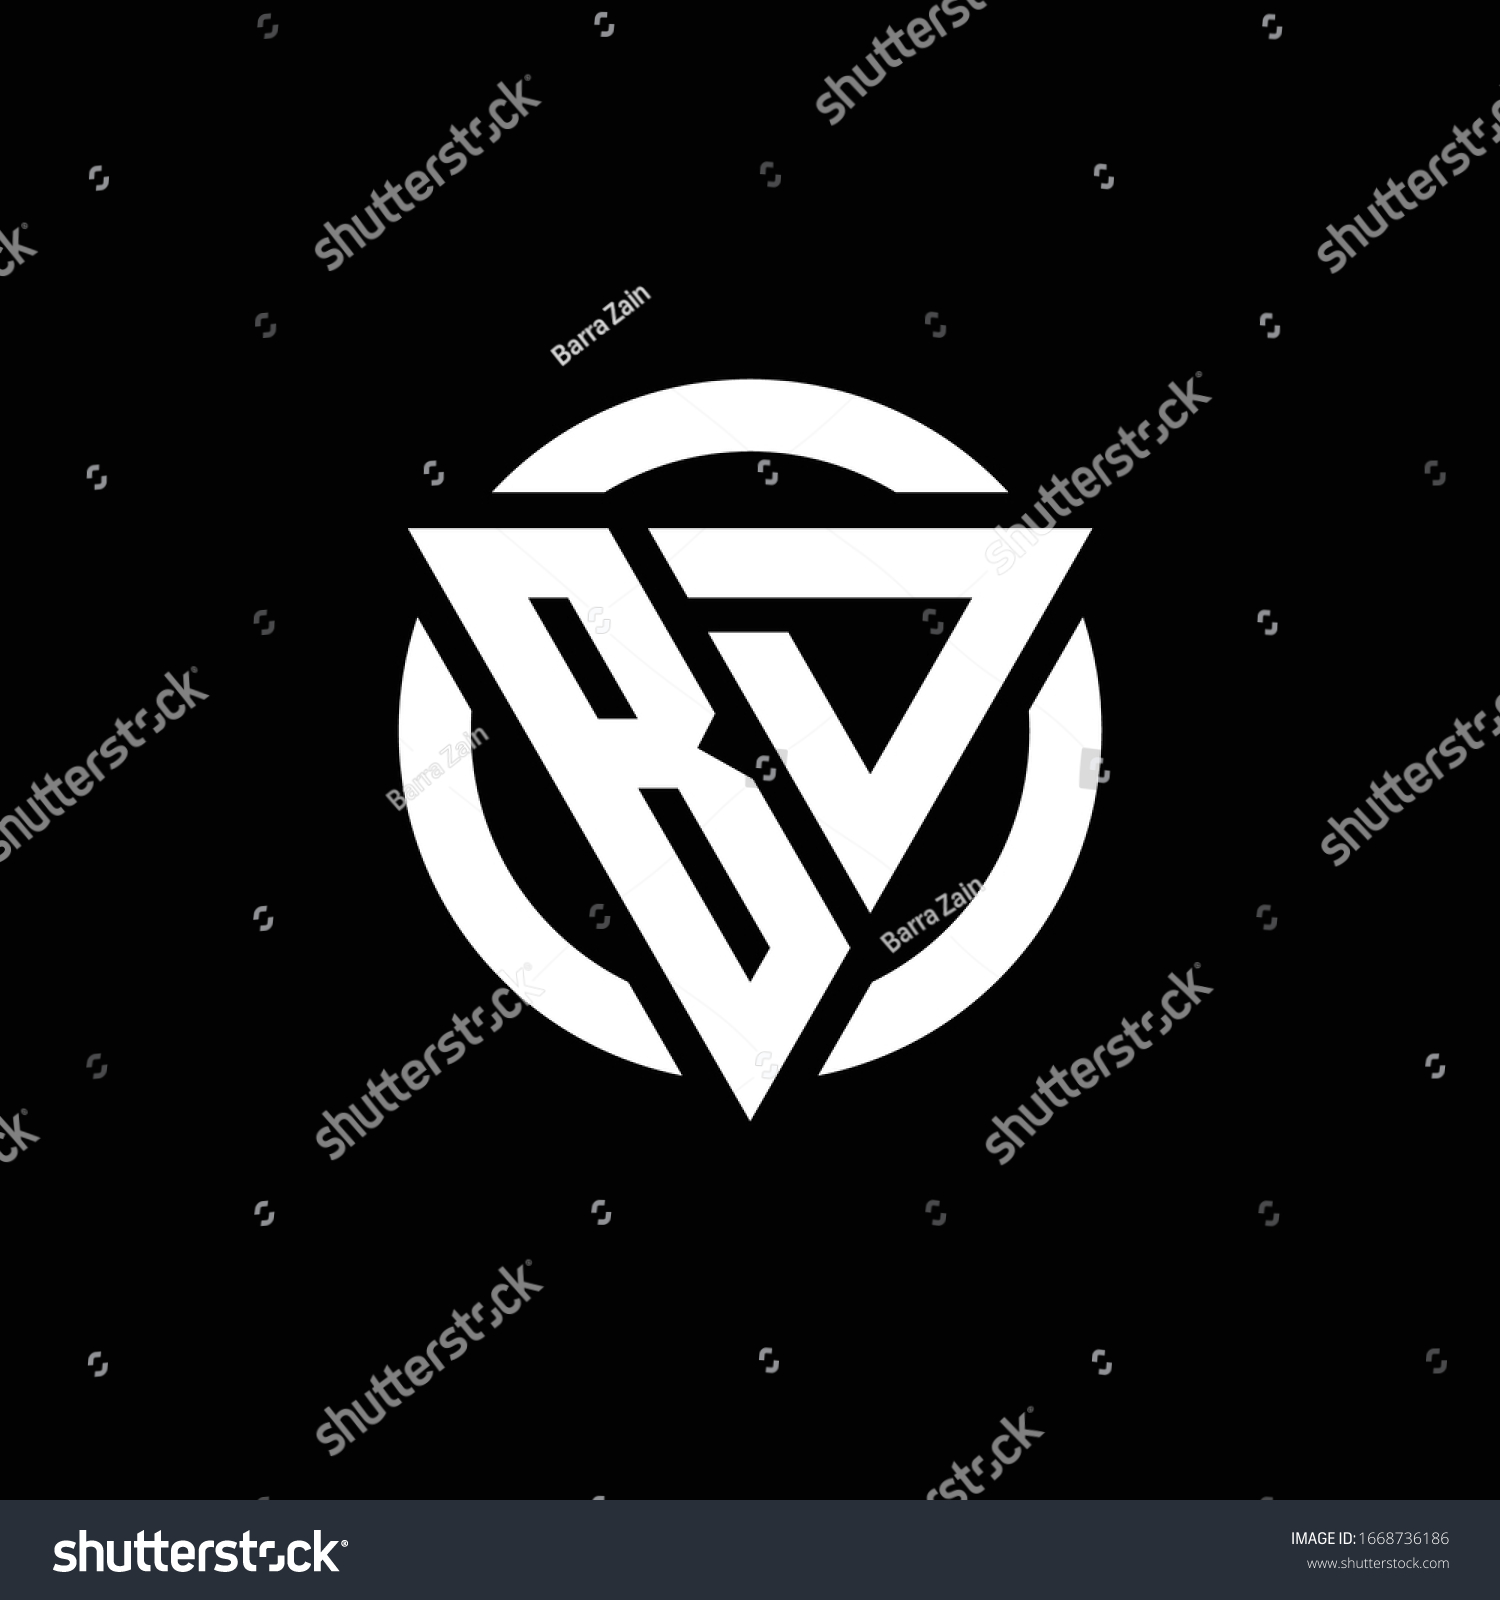 5,196 Bd logo design Images, Stock Photos & Vectors | Shutterstock